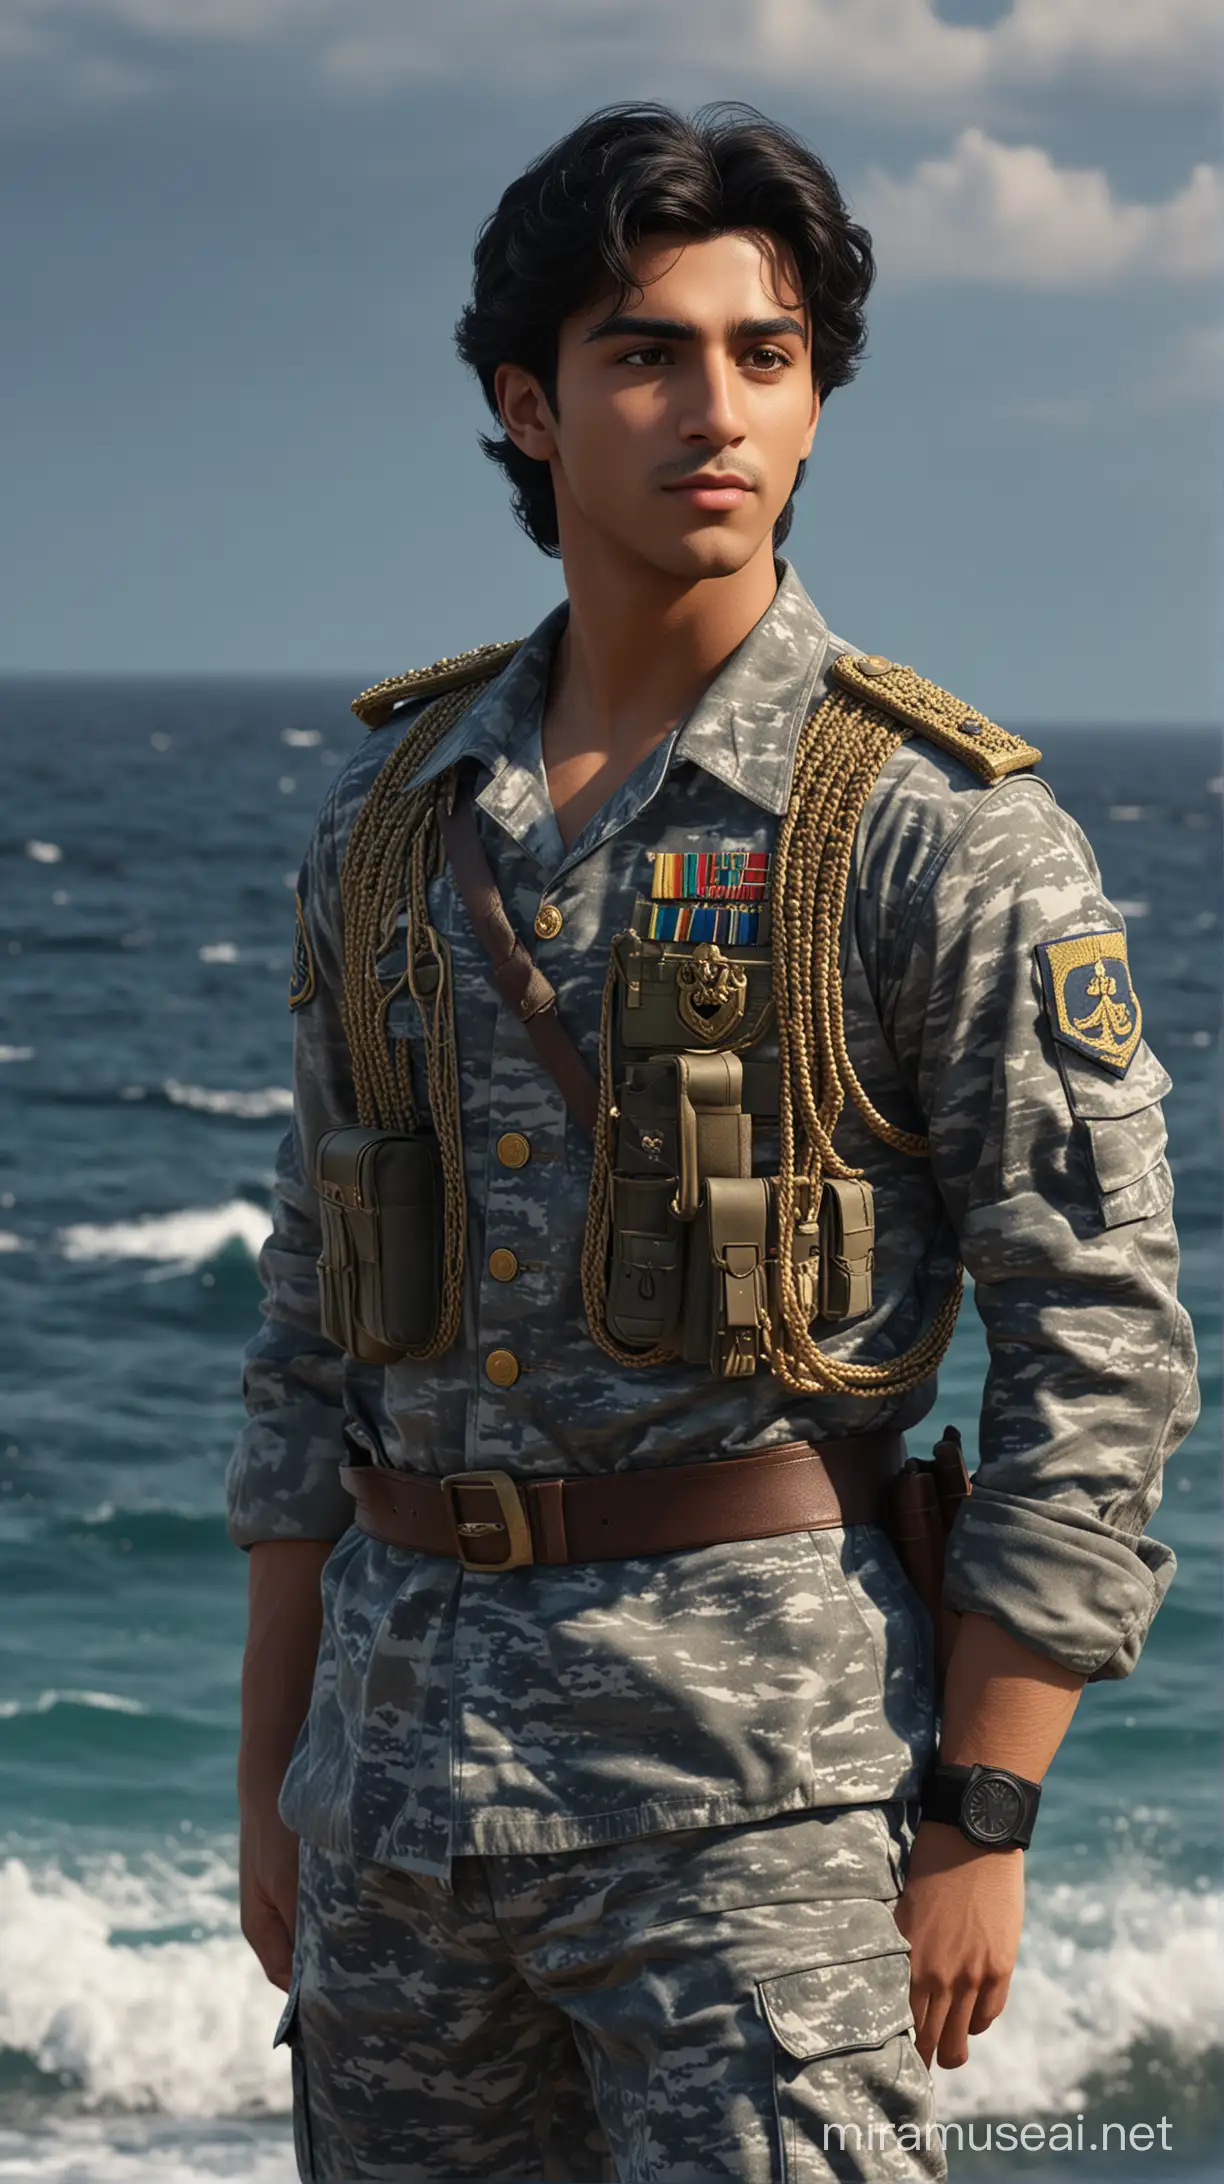 Arabic Navy Soldier Disney Prince Aladdin in Camouflage Uniform